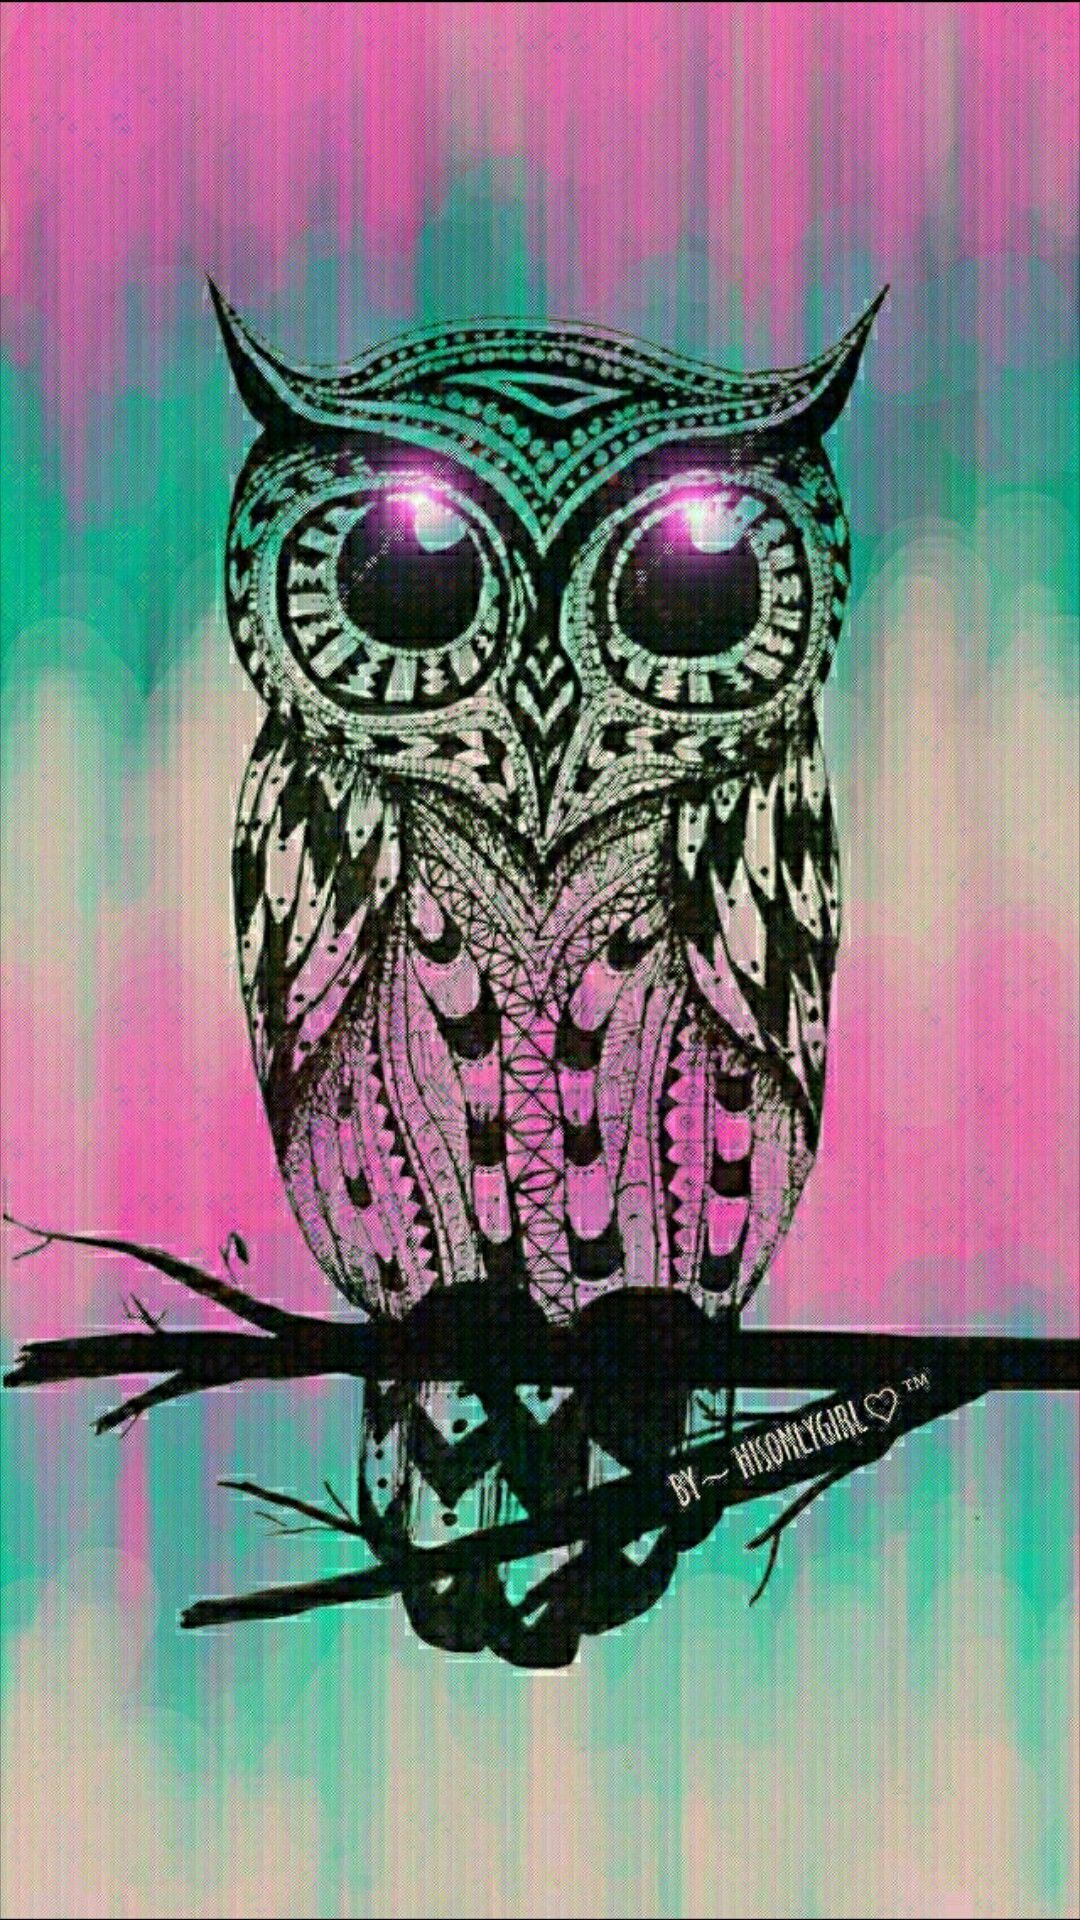 1080x1920 Cartoon Owl Wallpapers Top Free Cartoon Owl Backgrounds | Cute owls wallpaper, Owl wallpaper, Owl background